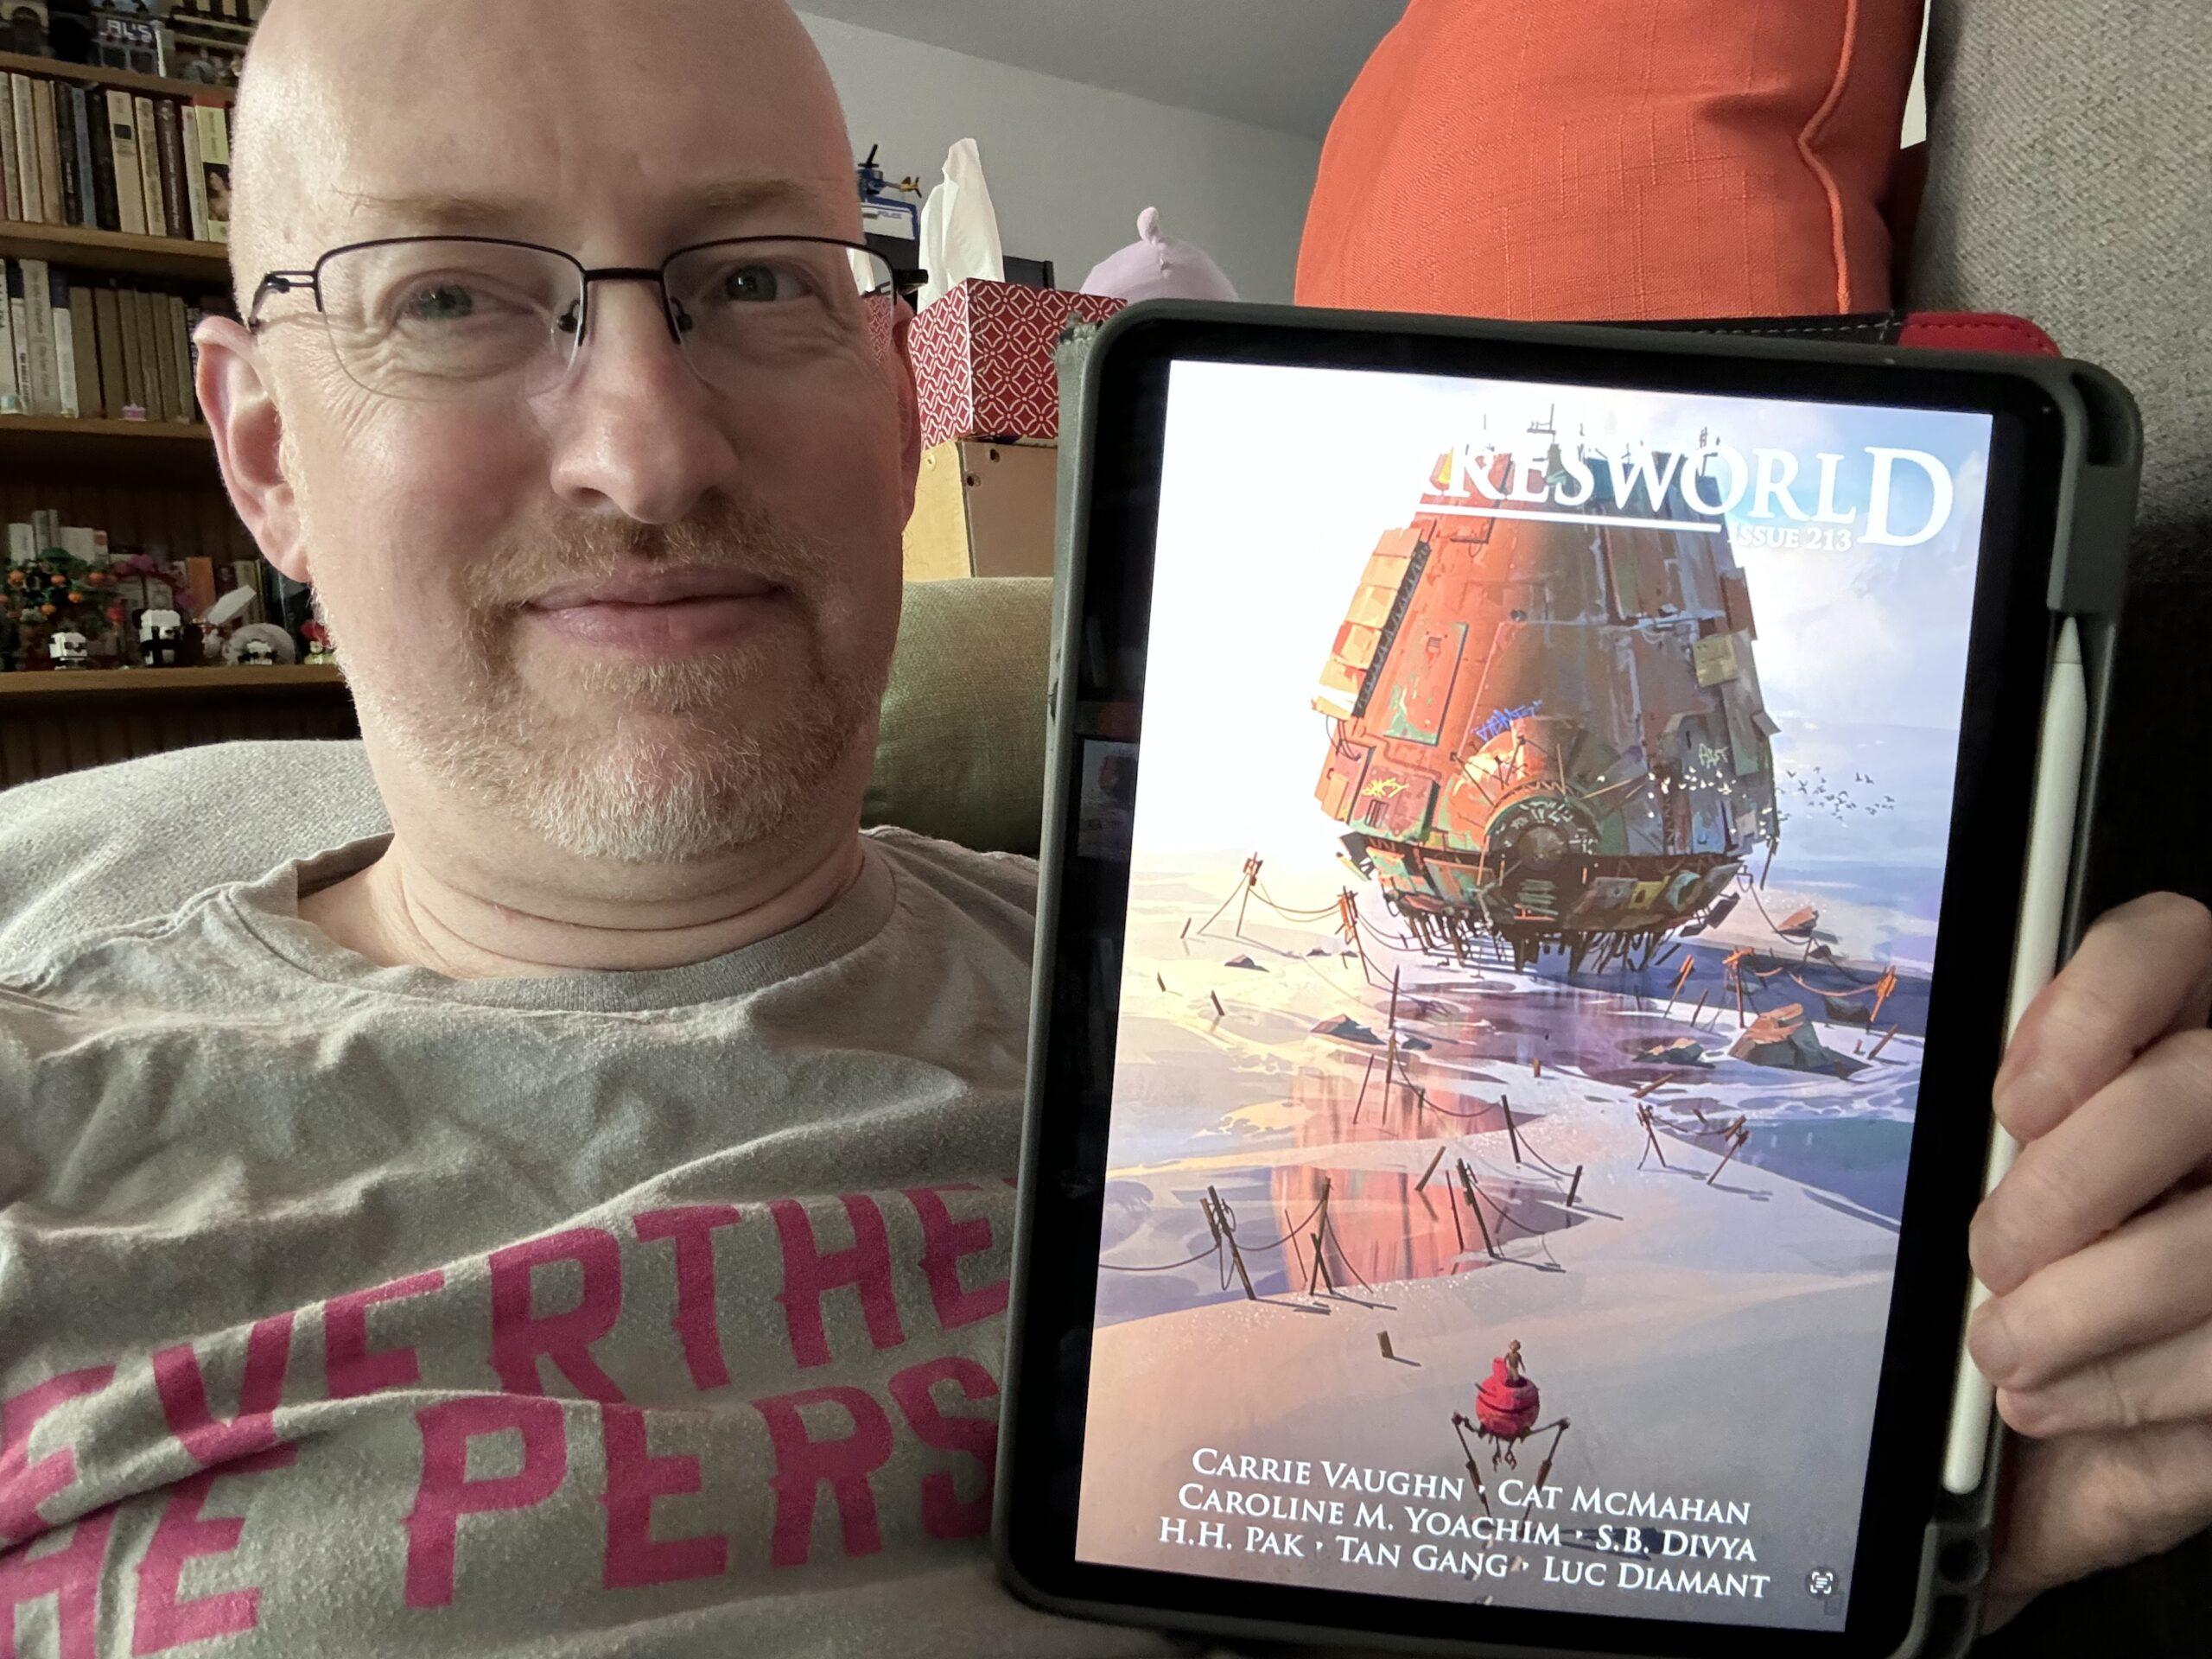 Me holding Clarksworld issue 213 on my iPad